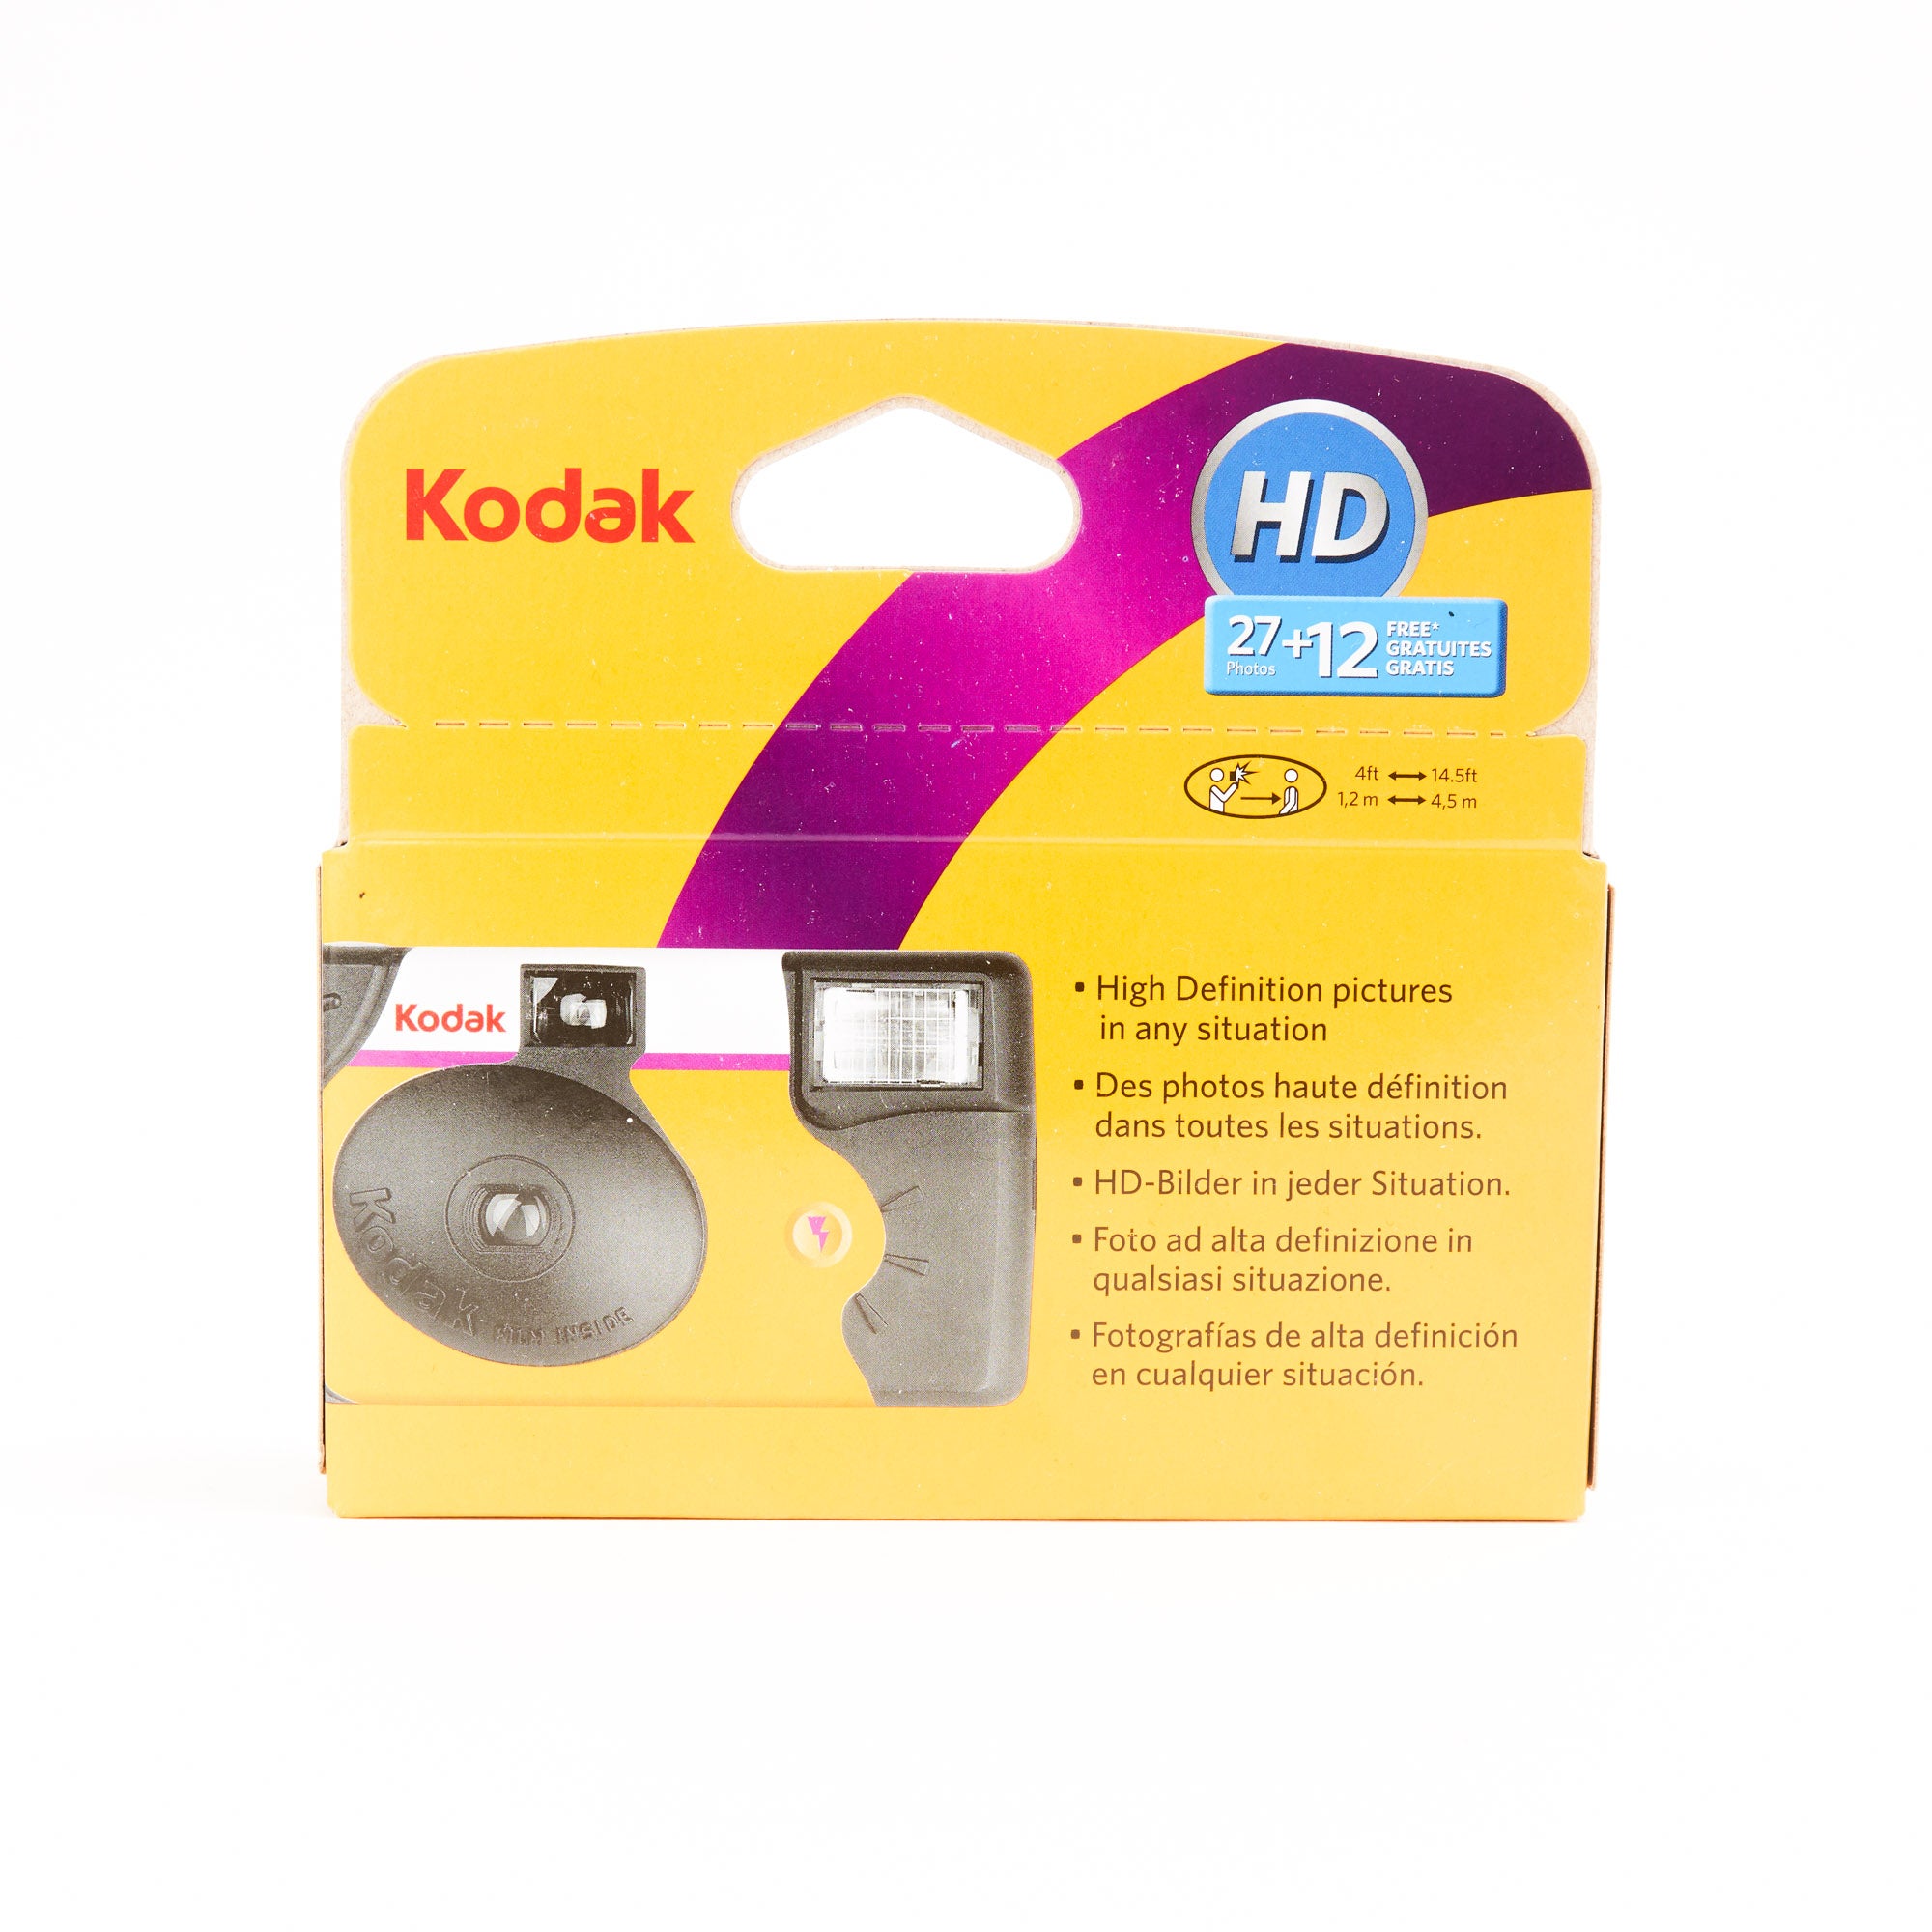 Kodak Power Flash Disposable 35mm Film Camera